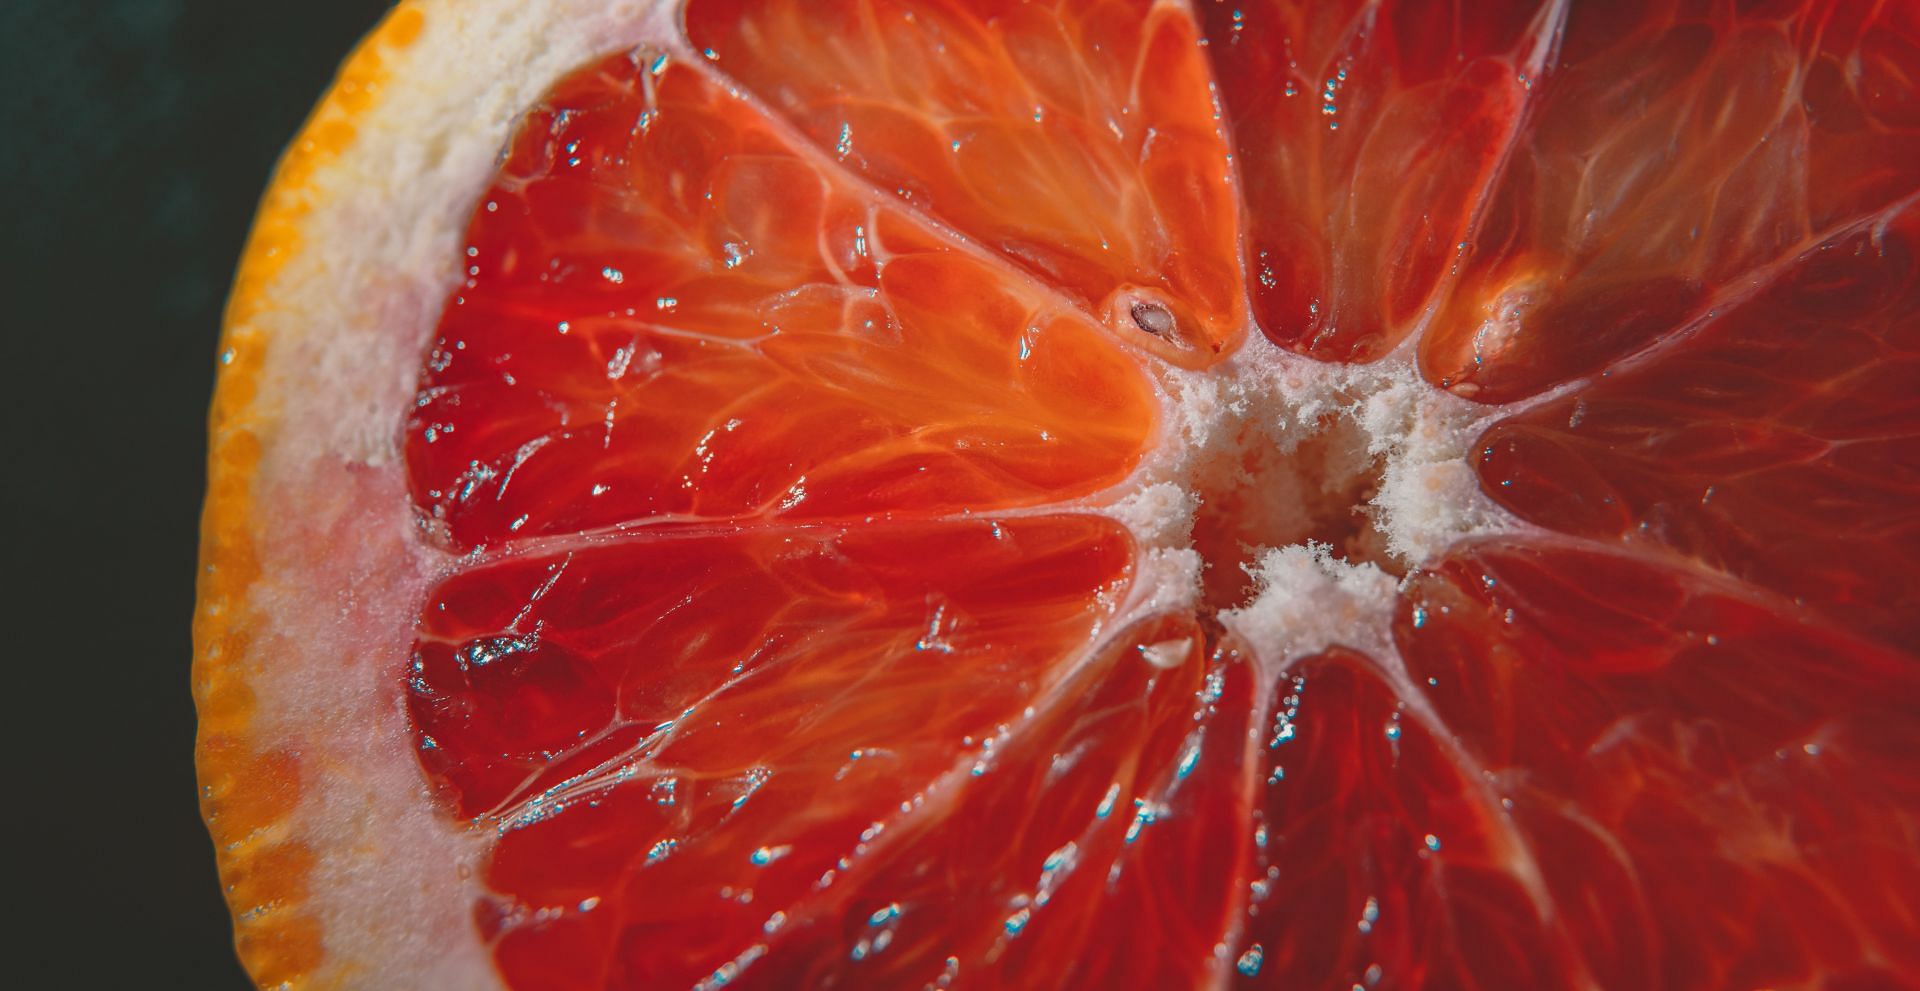 Side effects of blood orange (Image via Unsplash/Y S)